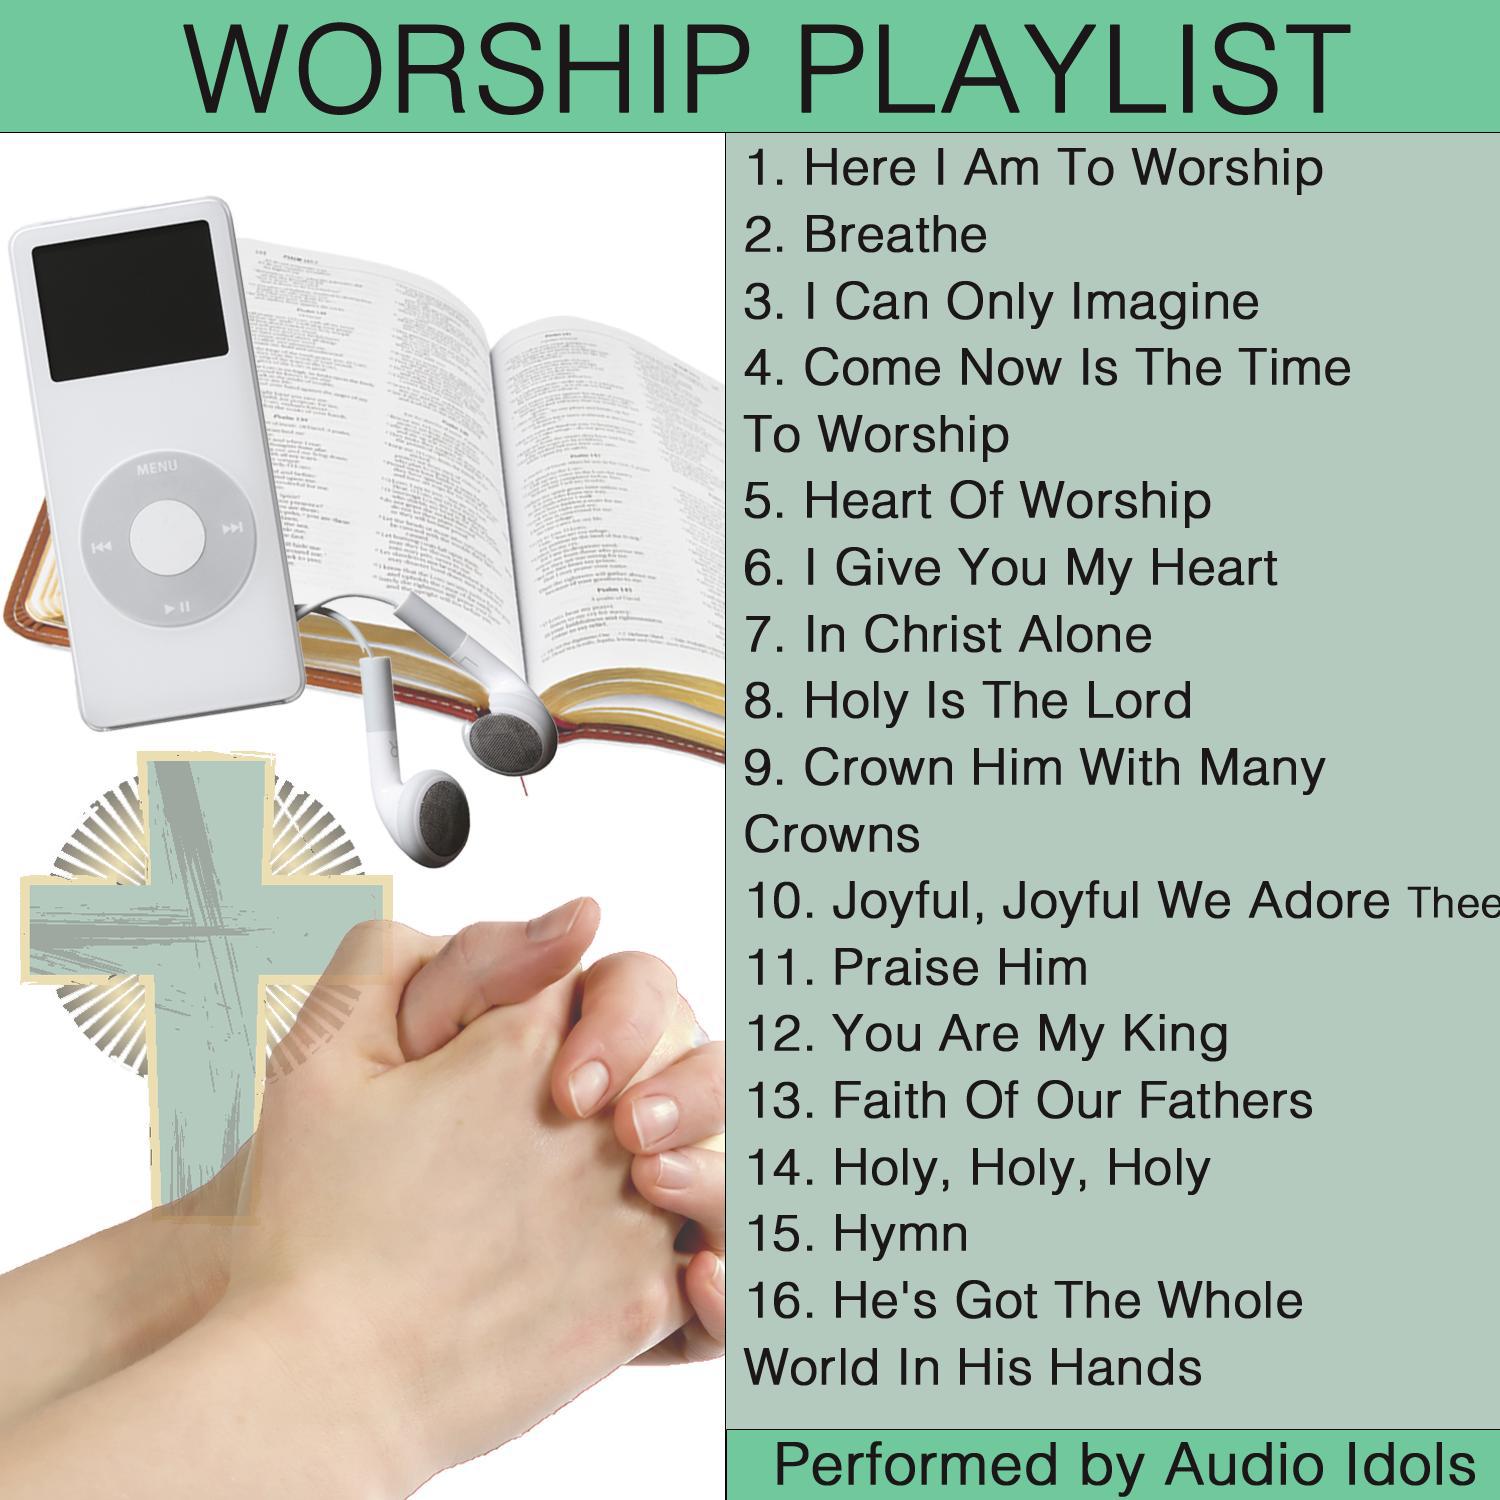 Here I Am to Worship: Worship Playlist